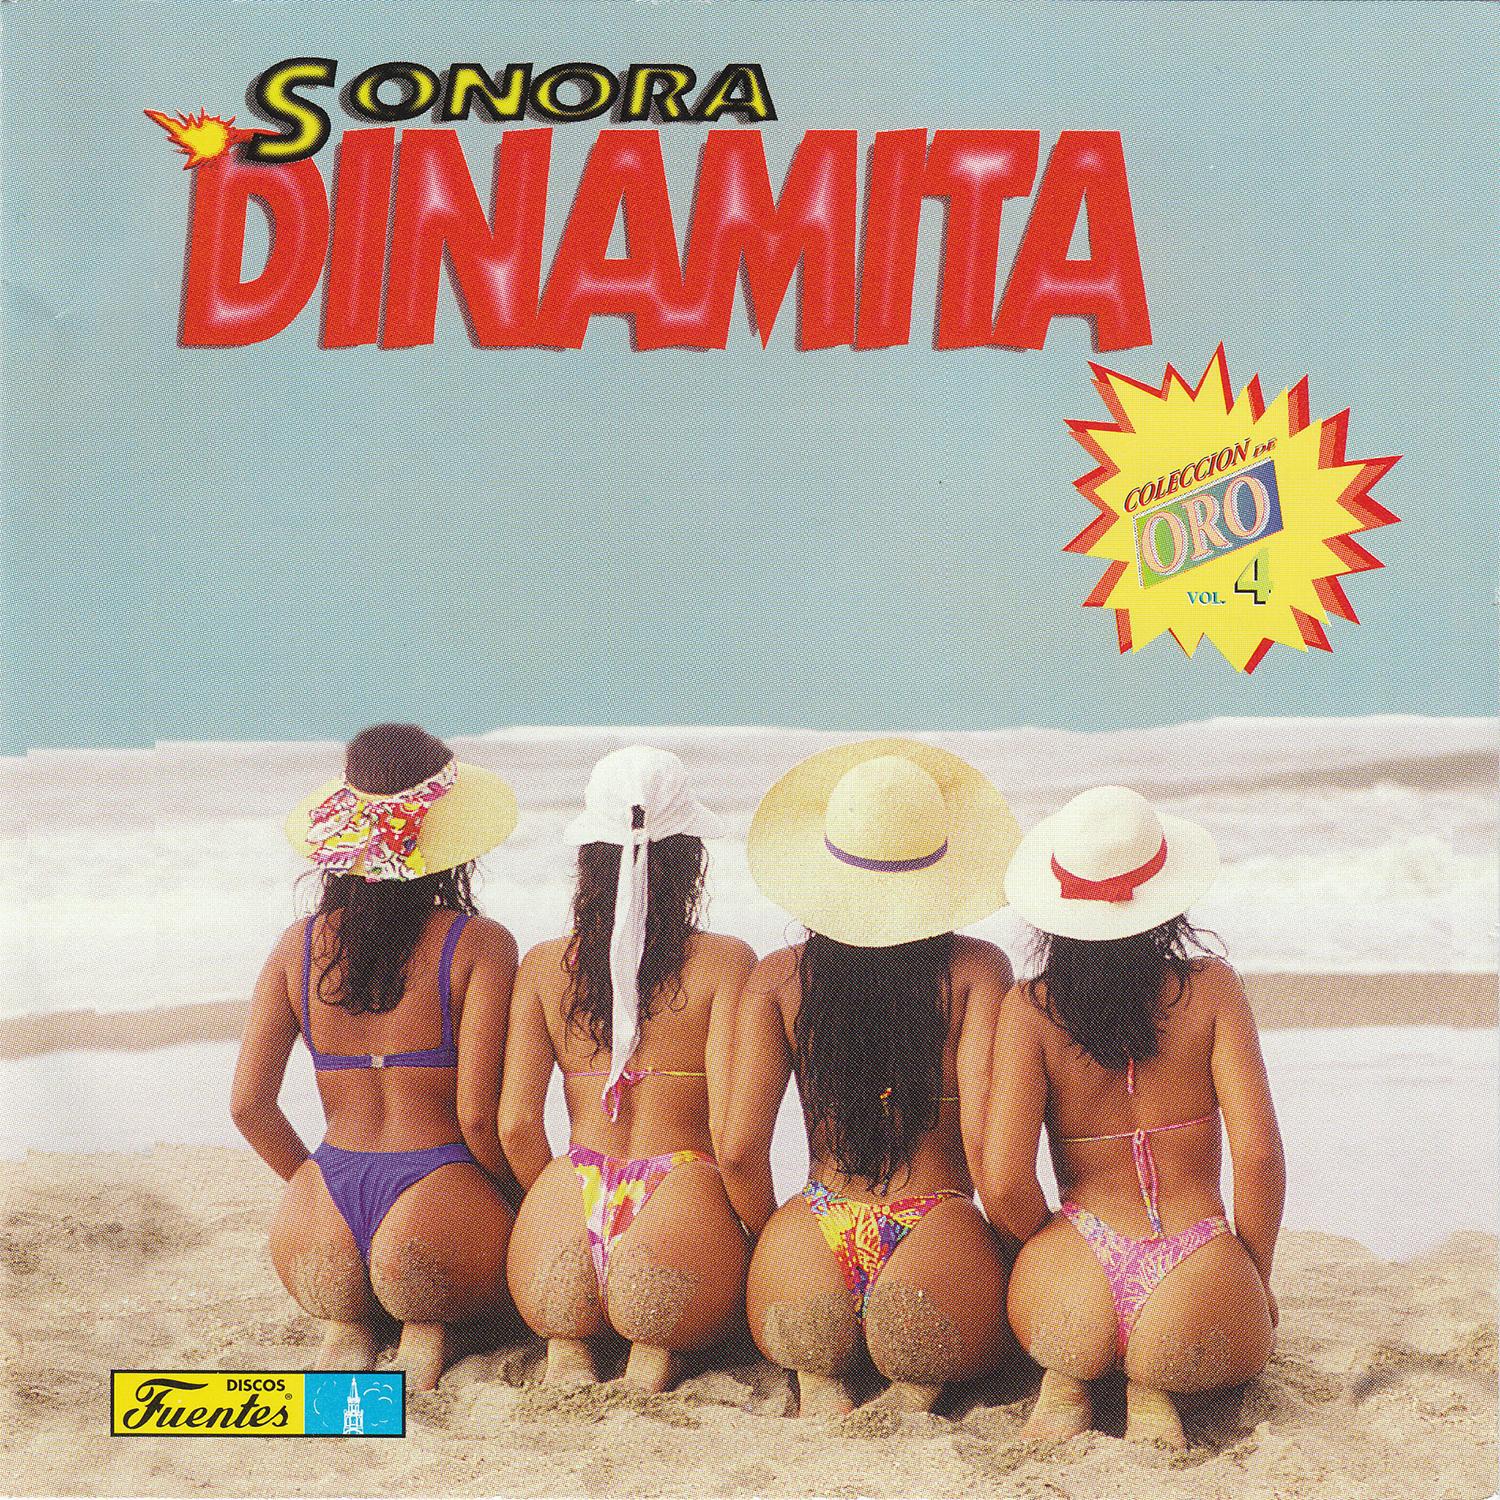 La Sonora Dinamita. 播 放 收 藏 分 享 下 载. Margarita. 